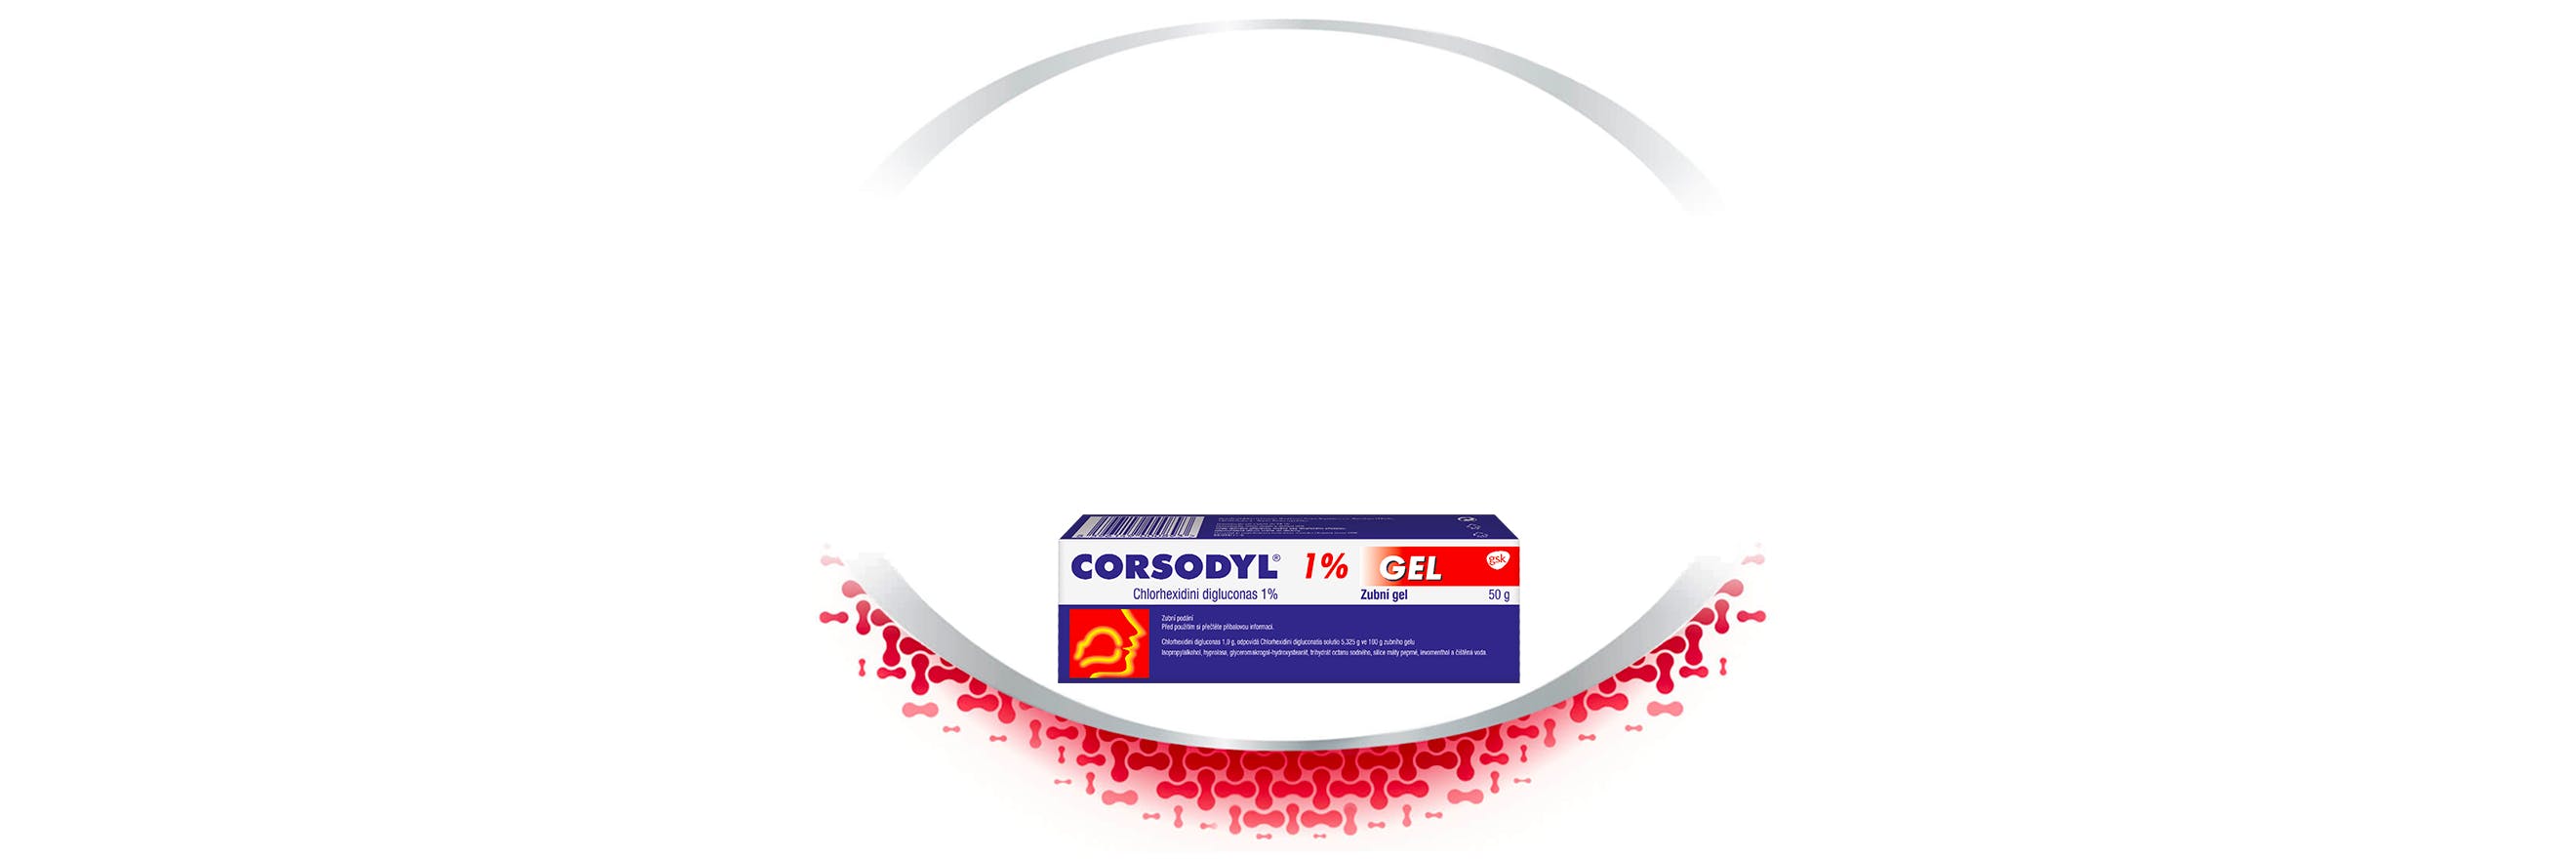 Corsodyl Intensive Treatment product range